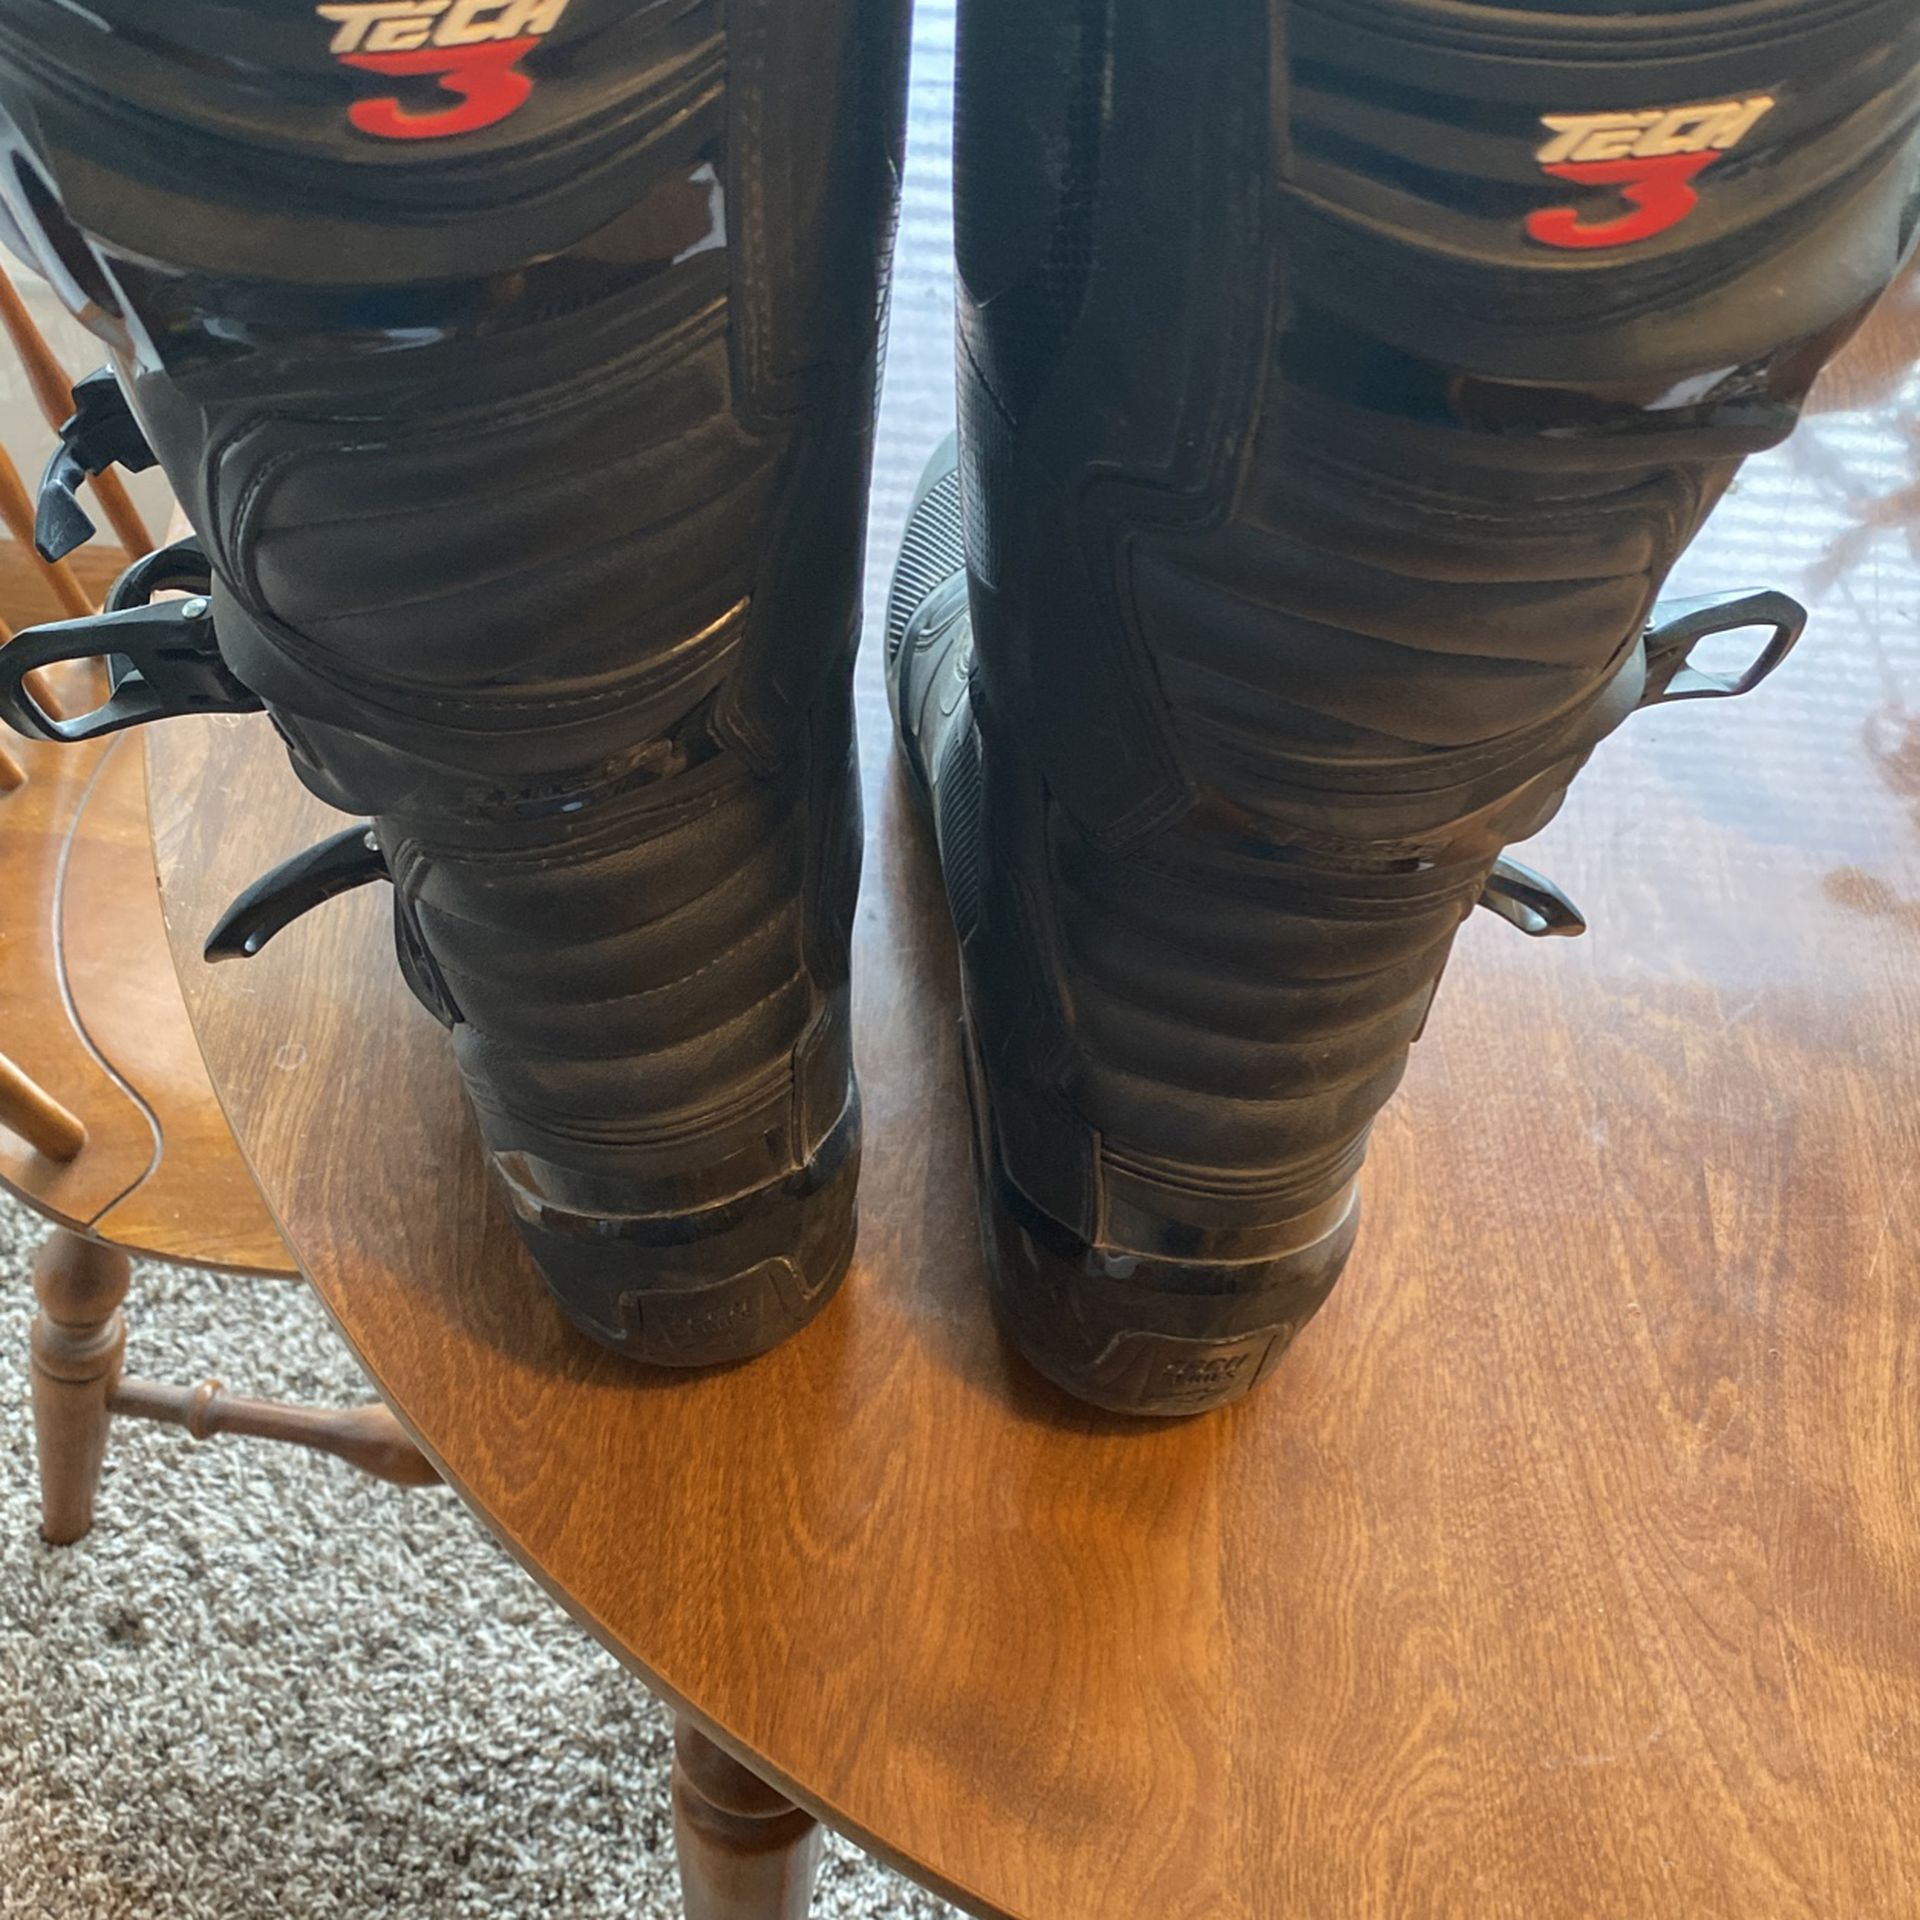 Alpinestars Dirt Bike Boots Tech3 Size 12, Clean, Like New